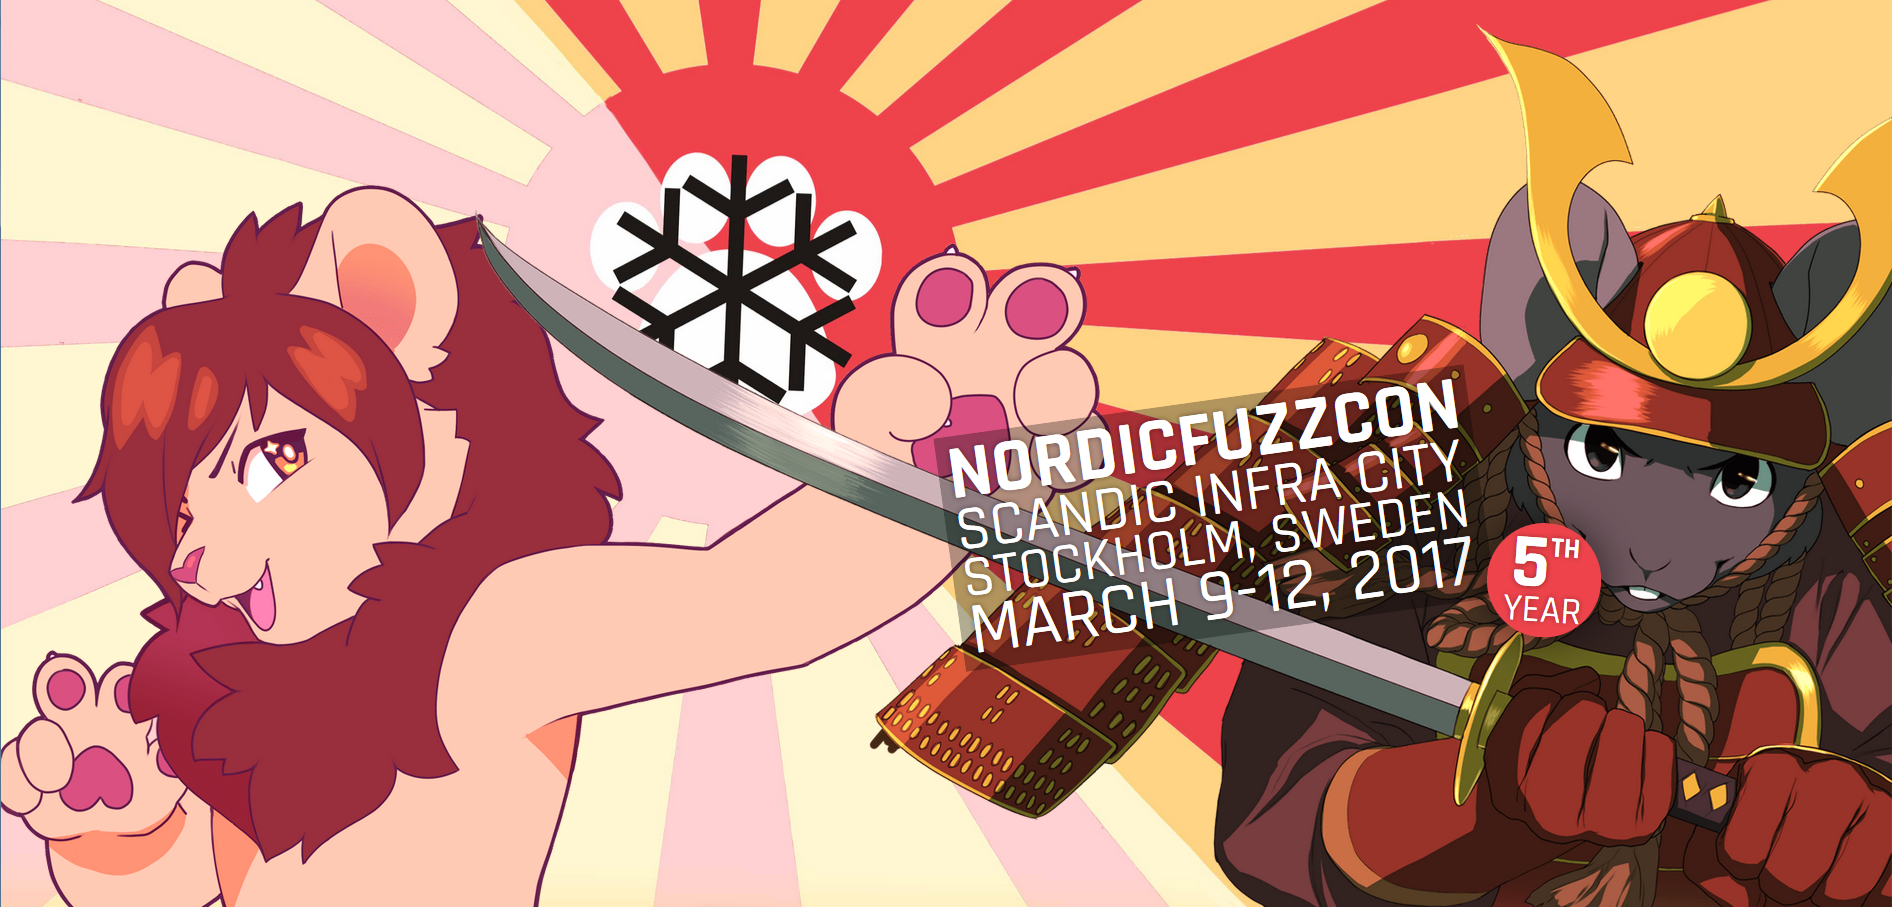 NordicFuzzCon 2017 - The big Nordic Furry Convention